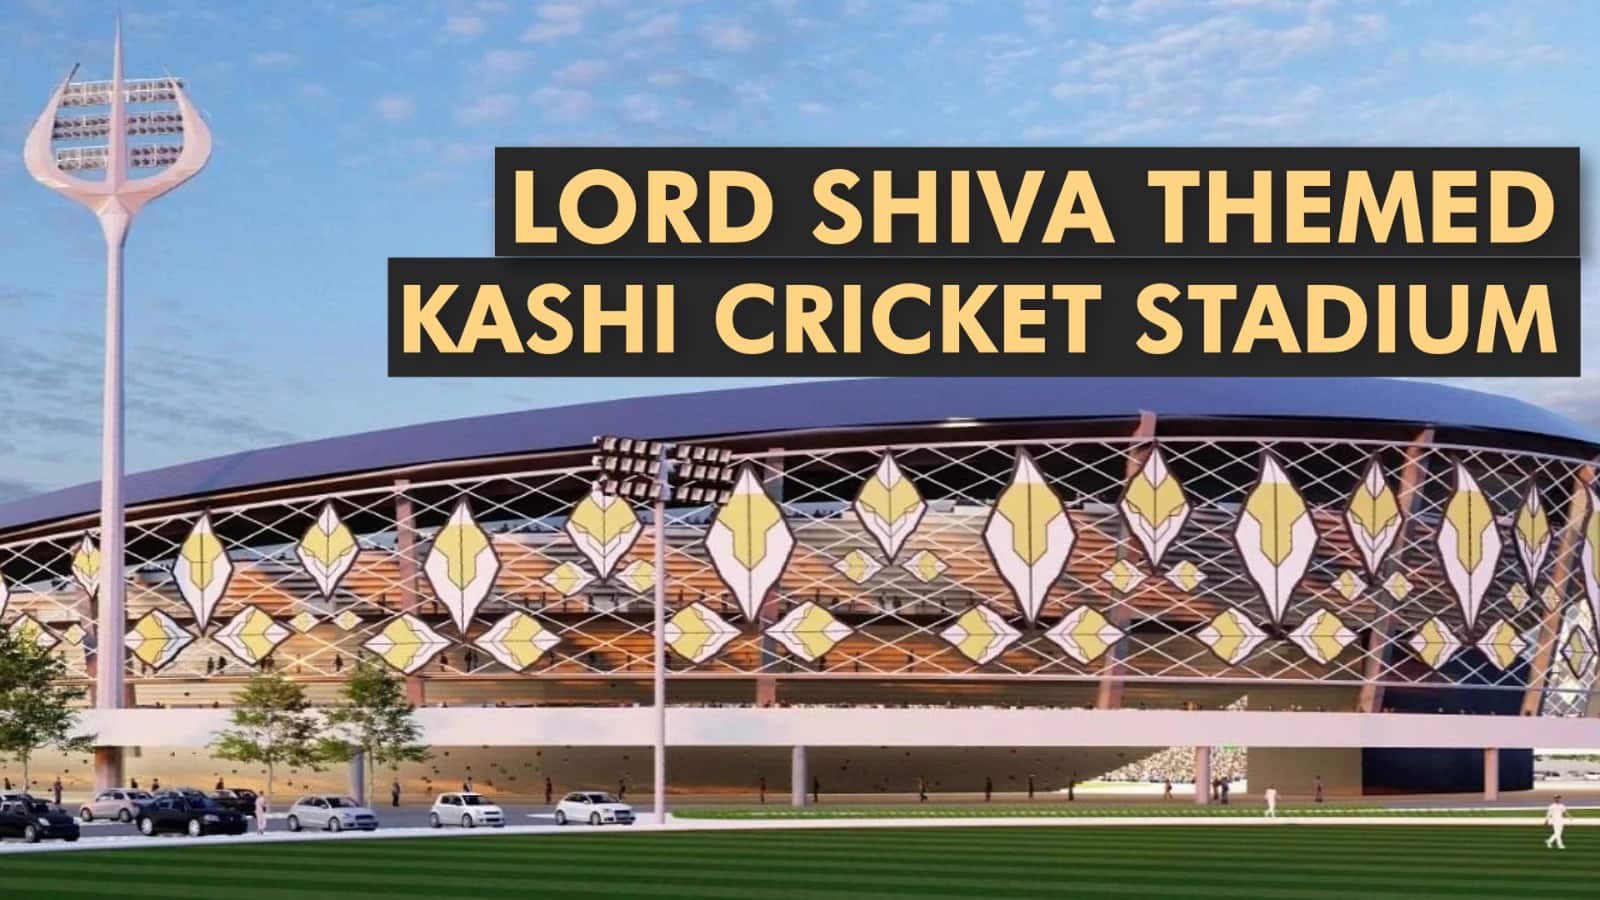 Kashi Cricket Stadium Lord Shiva Themed 320 Crore International Stadium To Be Built In Varanasi 3347